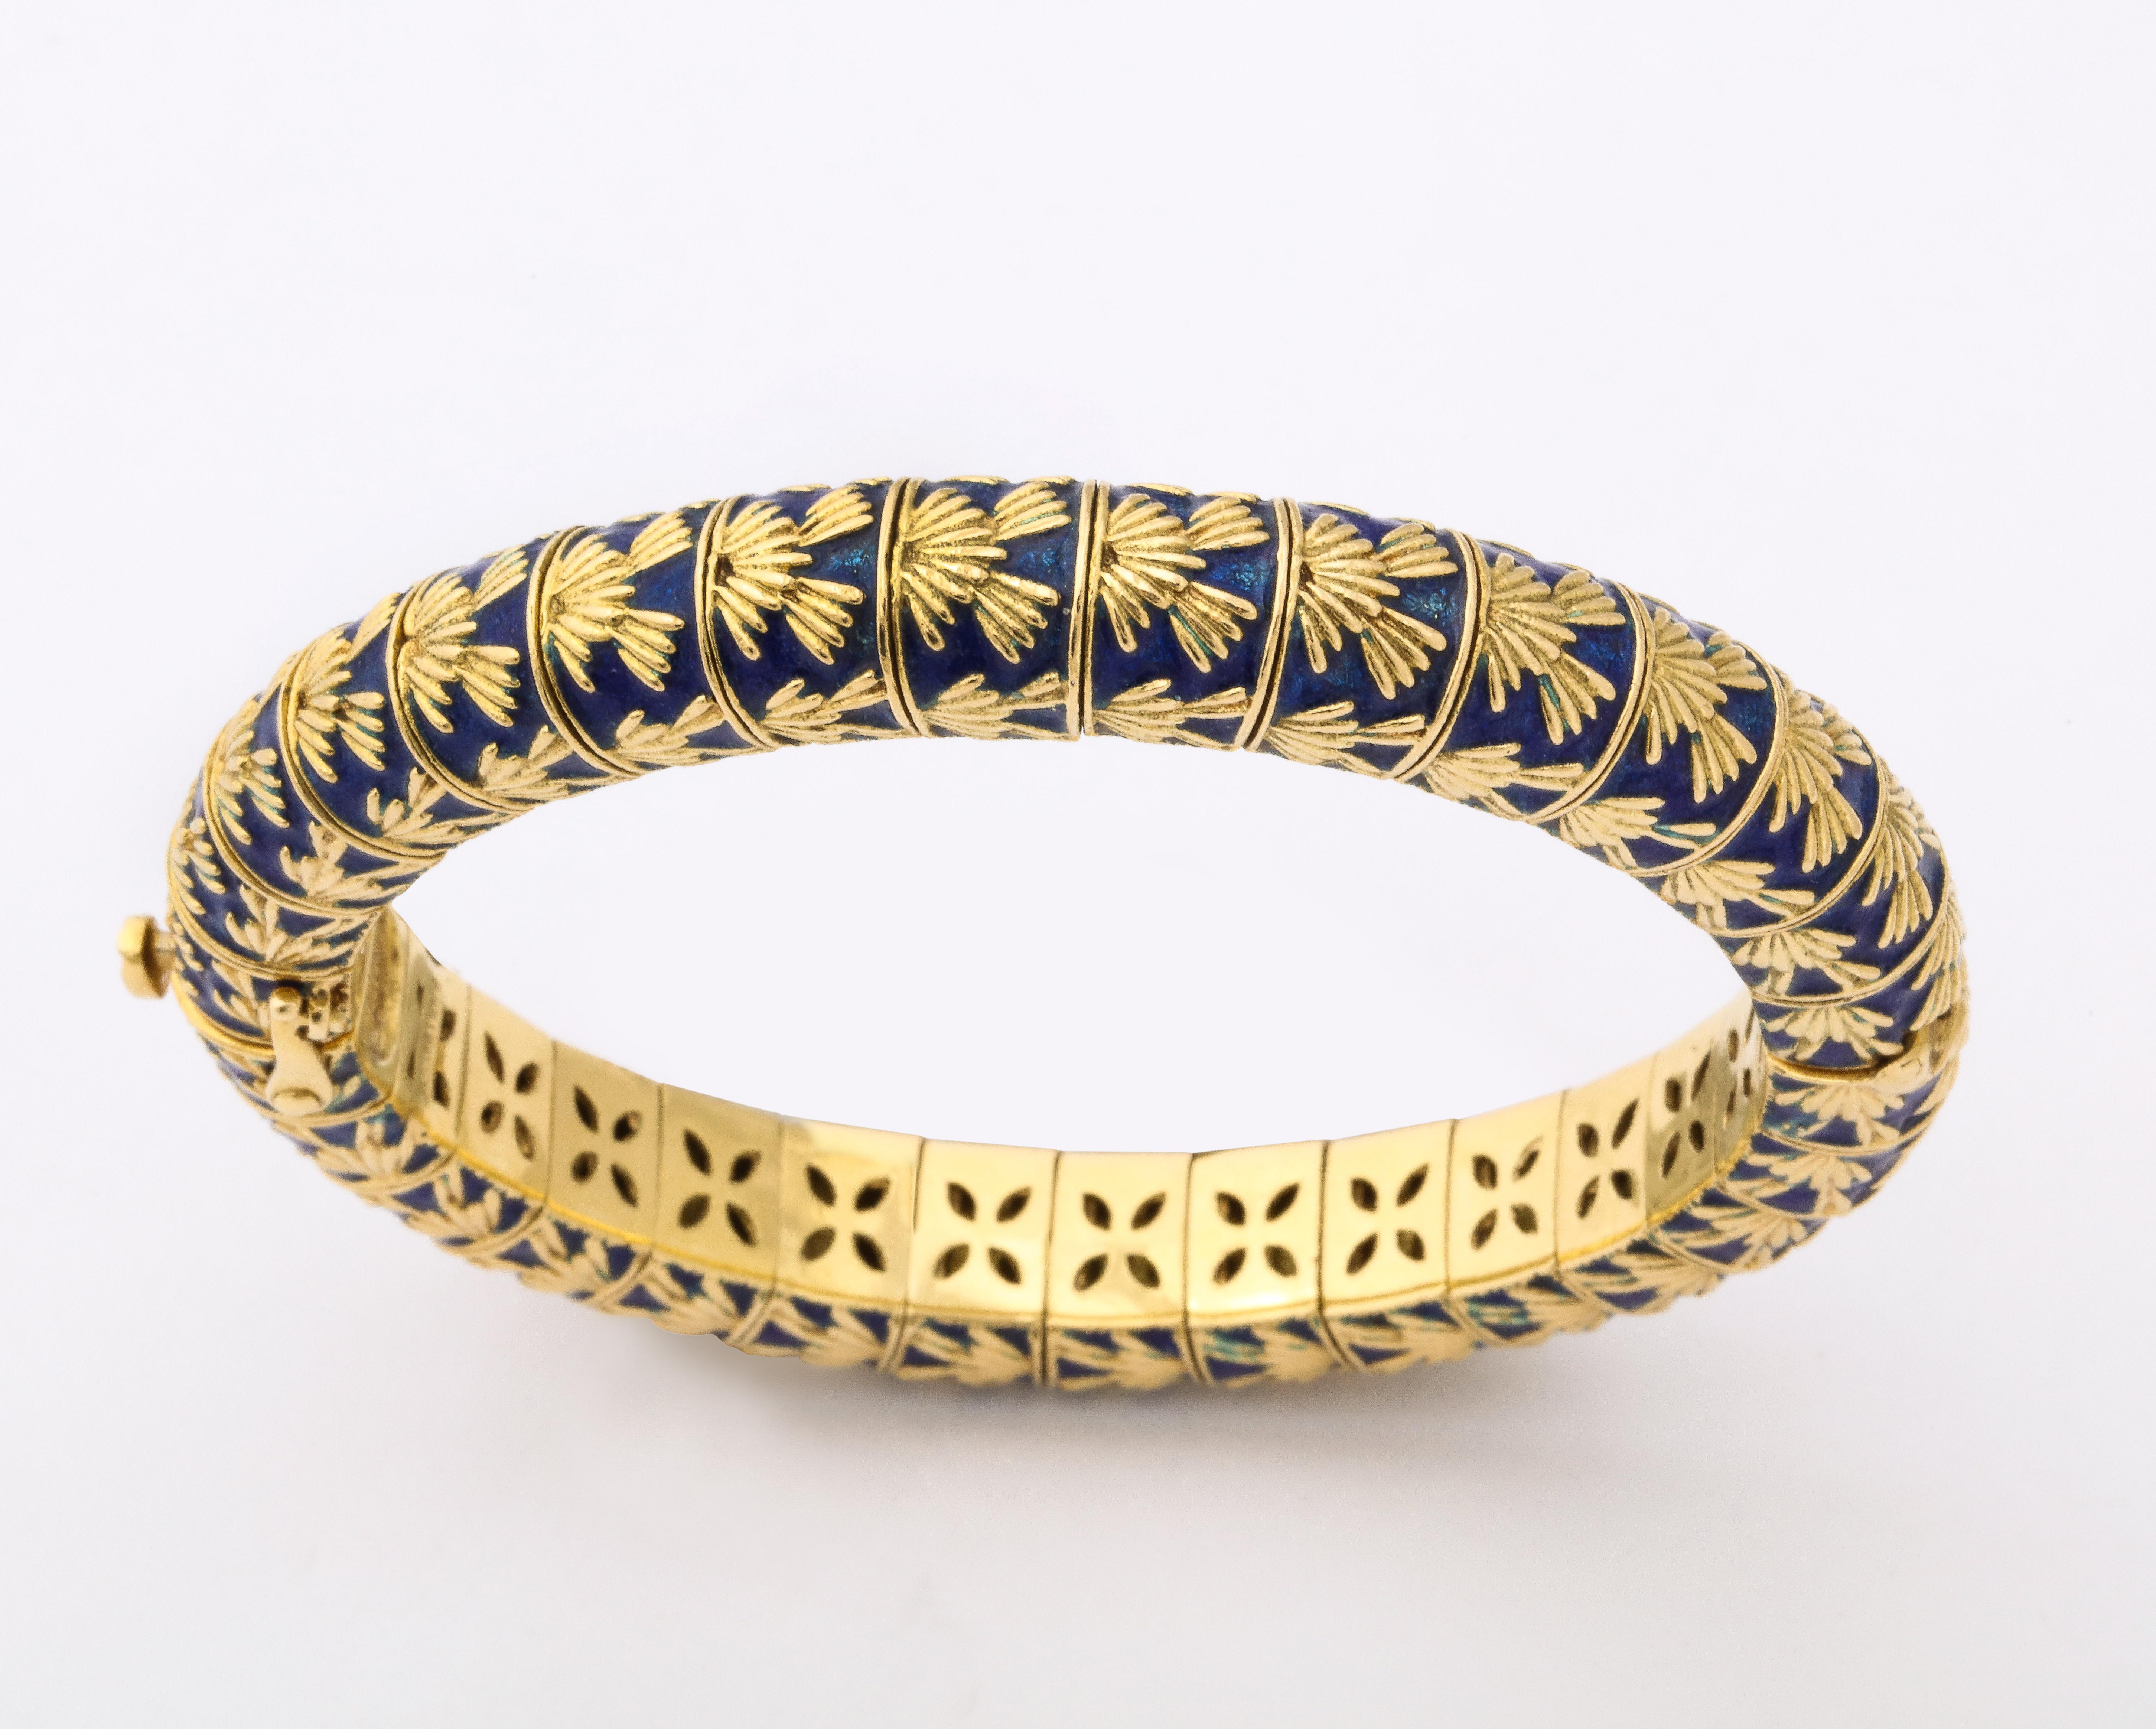 Tiffany & Co. Paris Blue Enamel Gold Bangle Bracelet For Sale 1